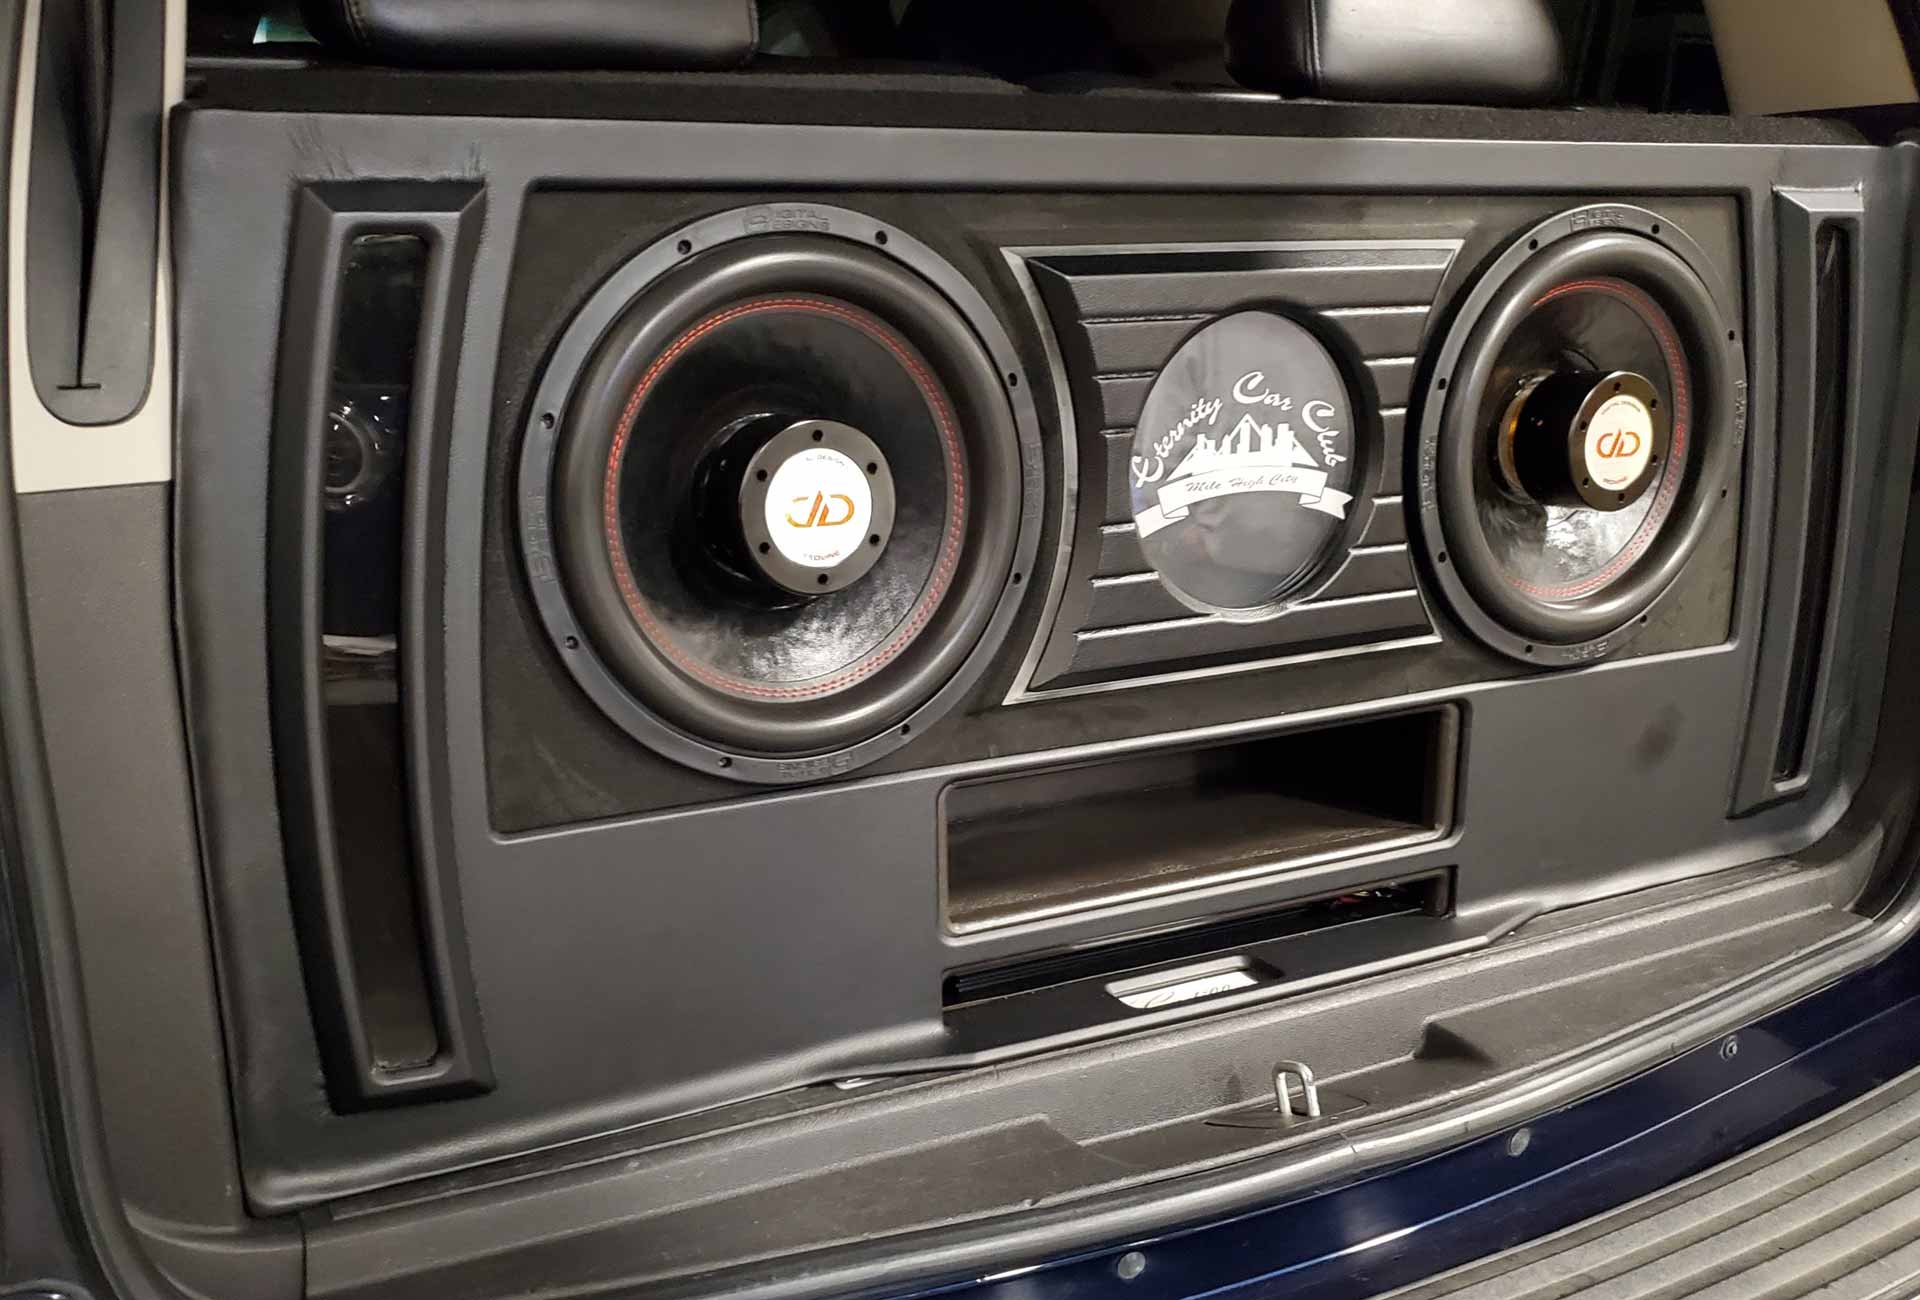 New speaker system in trunk of car